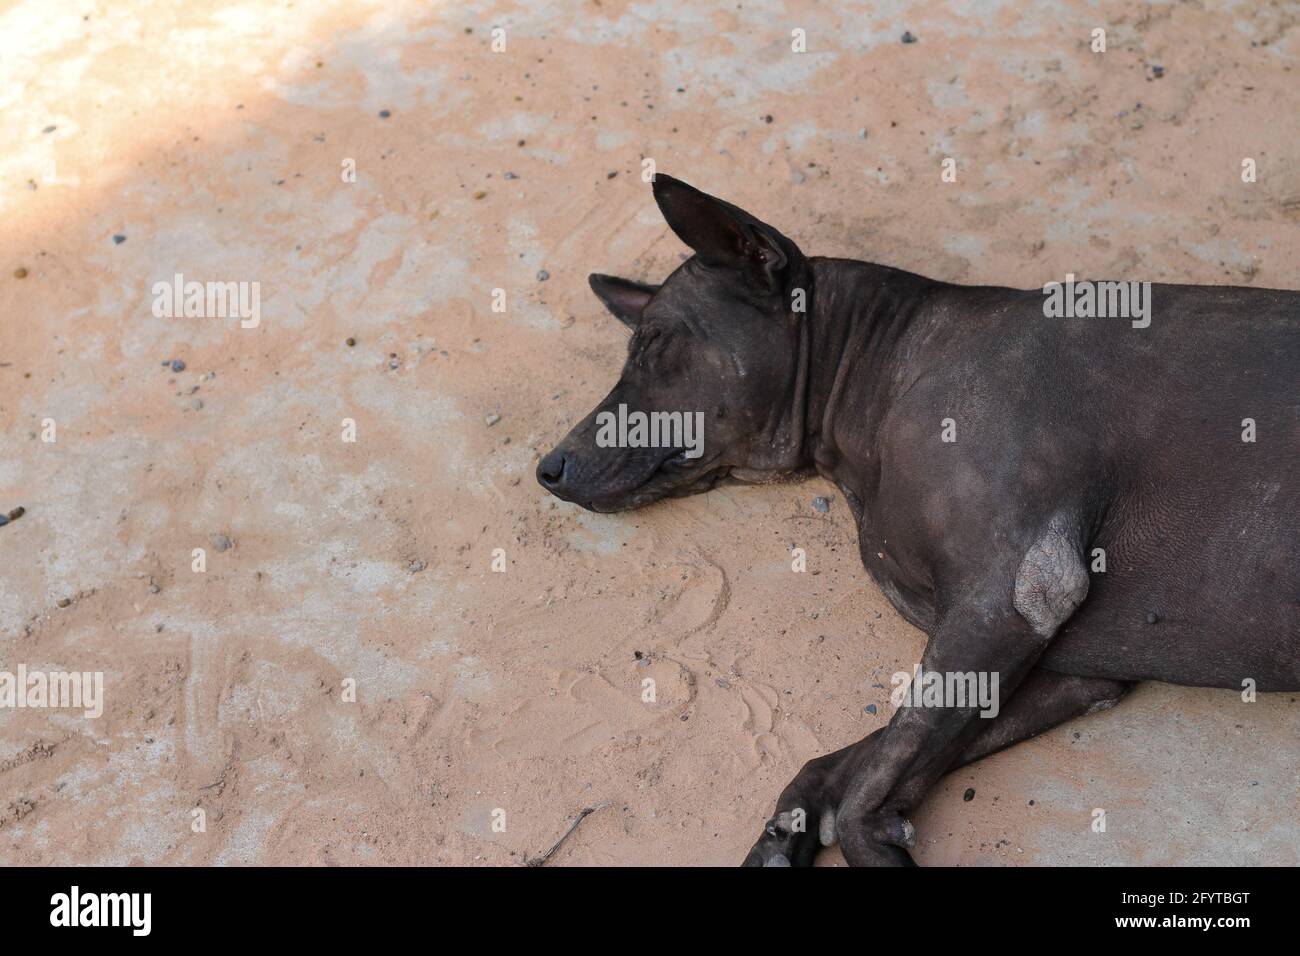 The black female dog sleeps on the cement floor. Stock Photo